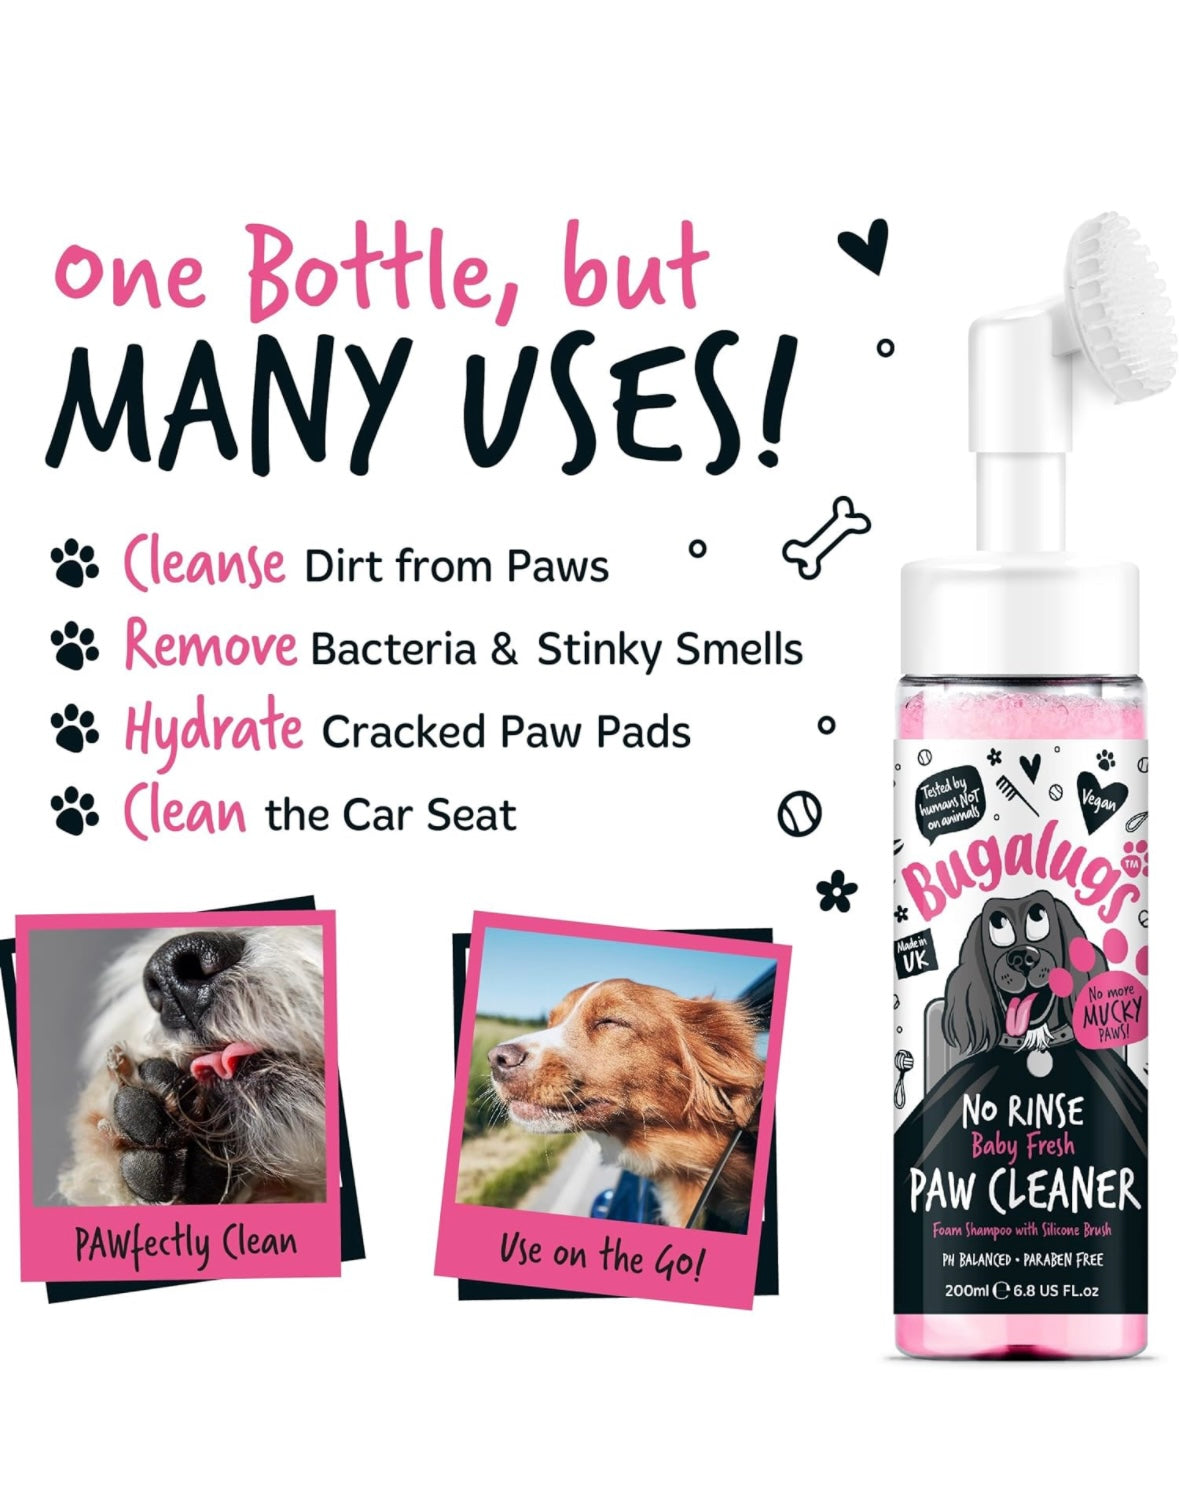 Foam Cat & Dog shampoo with Silicone Brush Head - No rinse